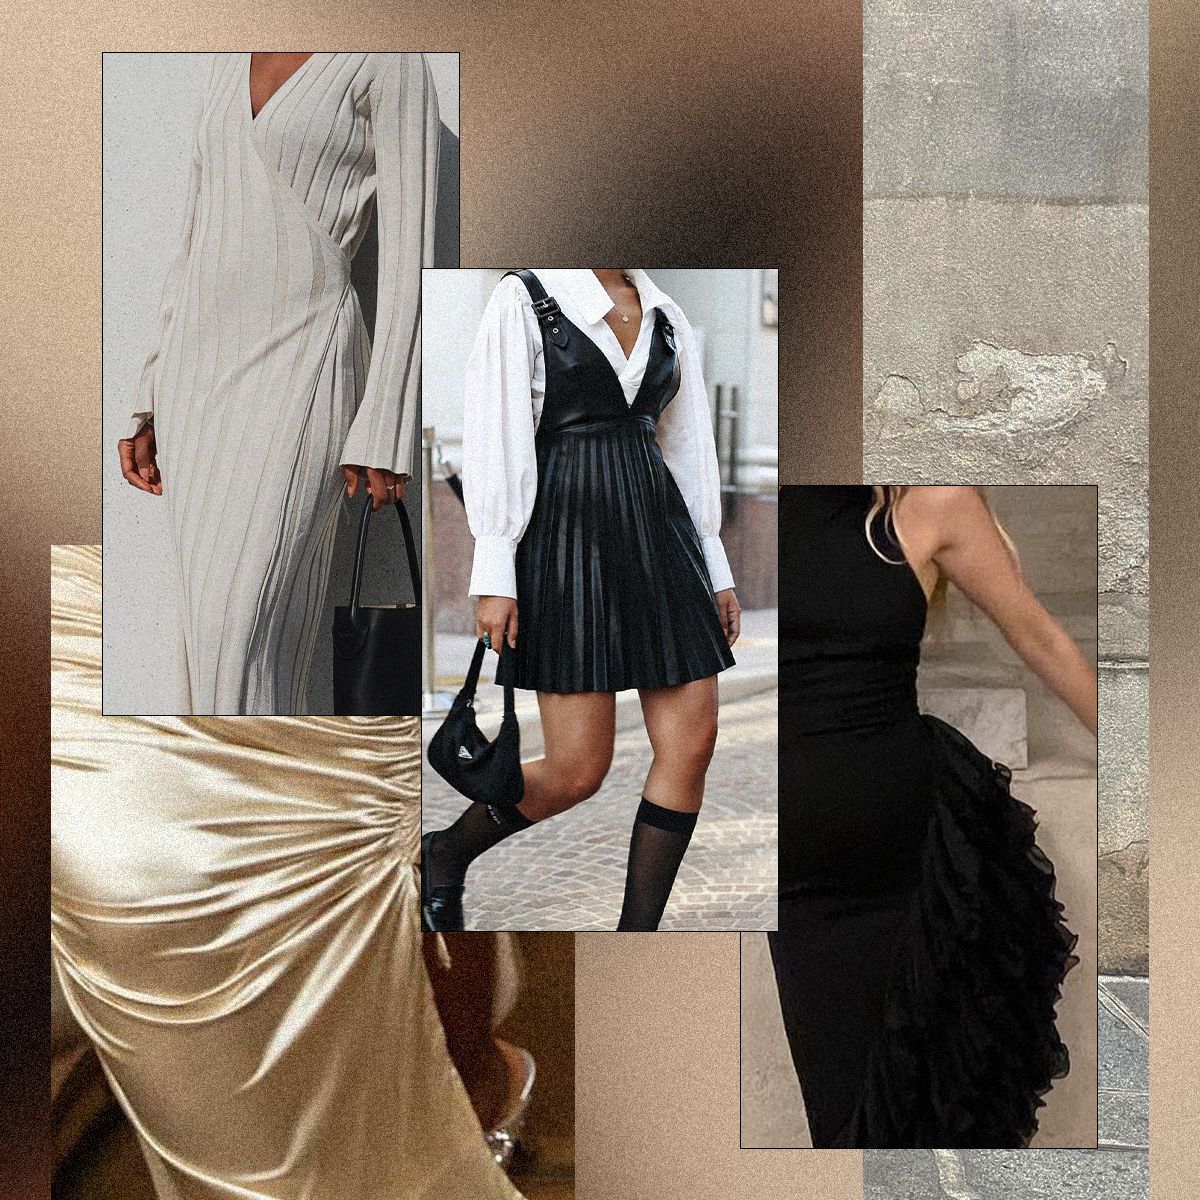 Faithfull the Brand Morissa Mini Dress Black Linen